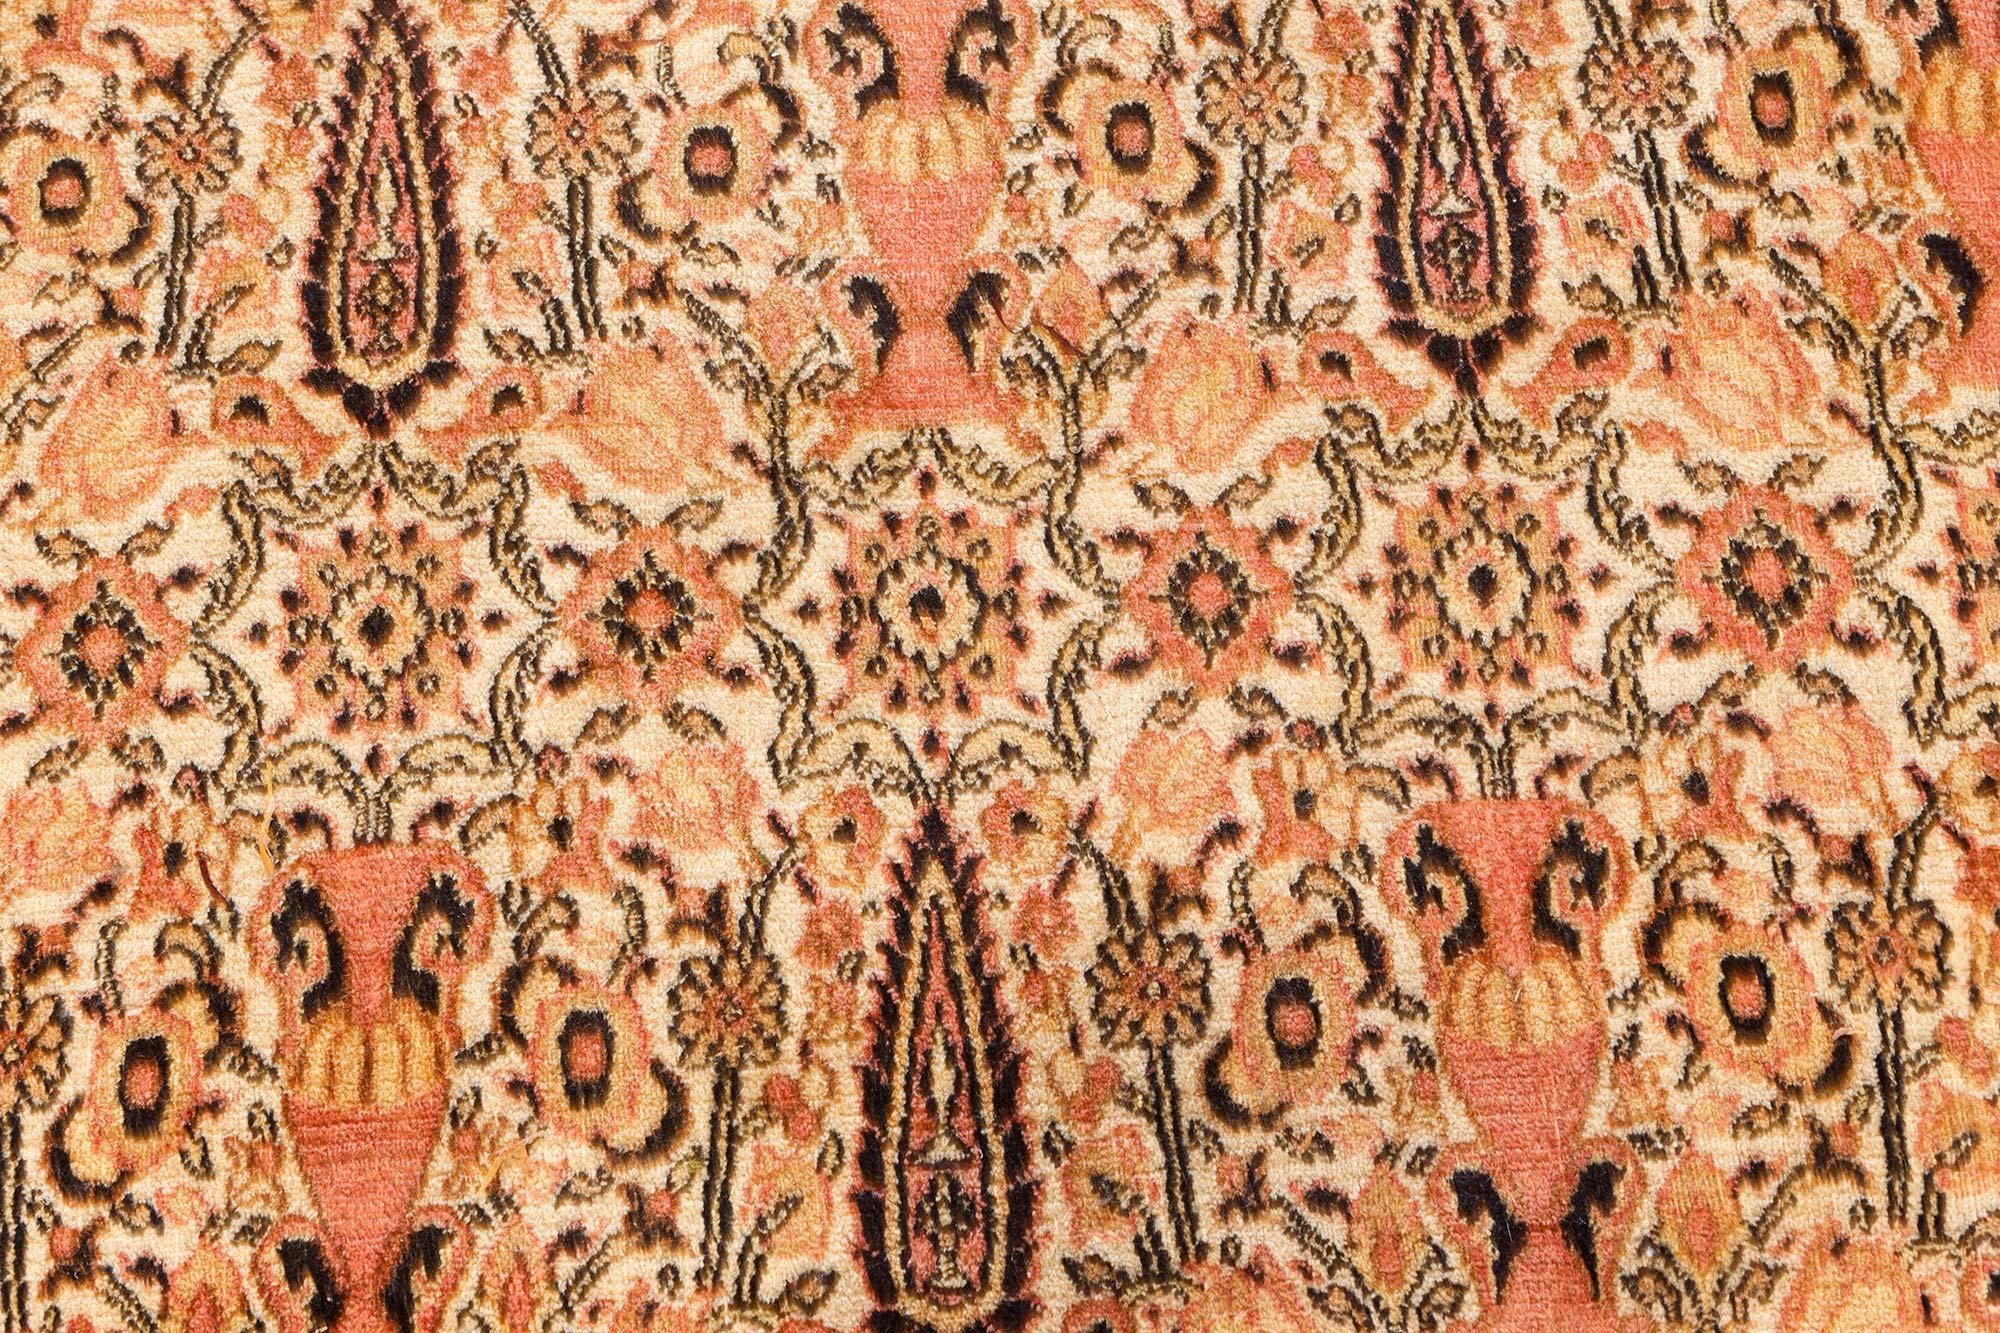 Authentic Persian Khorassan handmade wool carpet
Size: 11'6